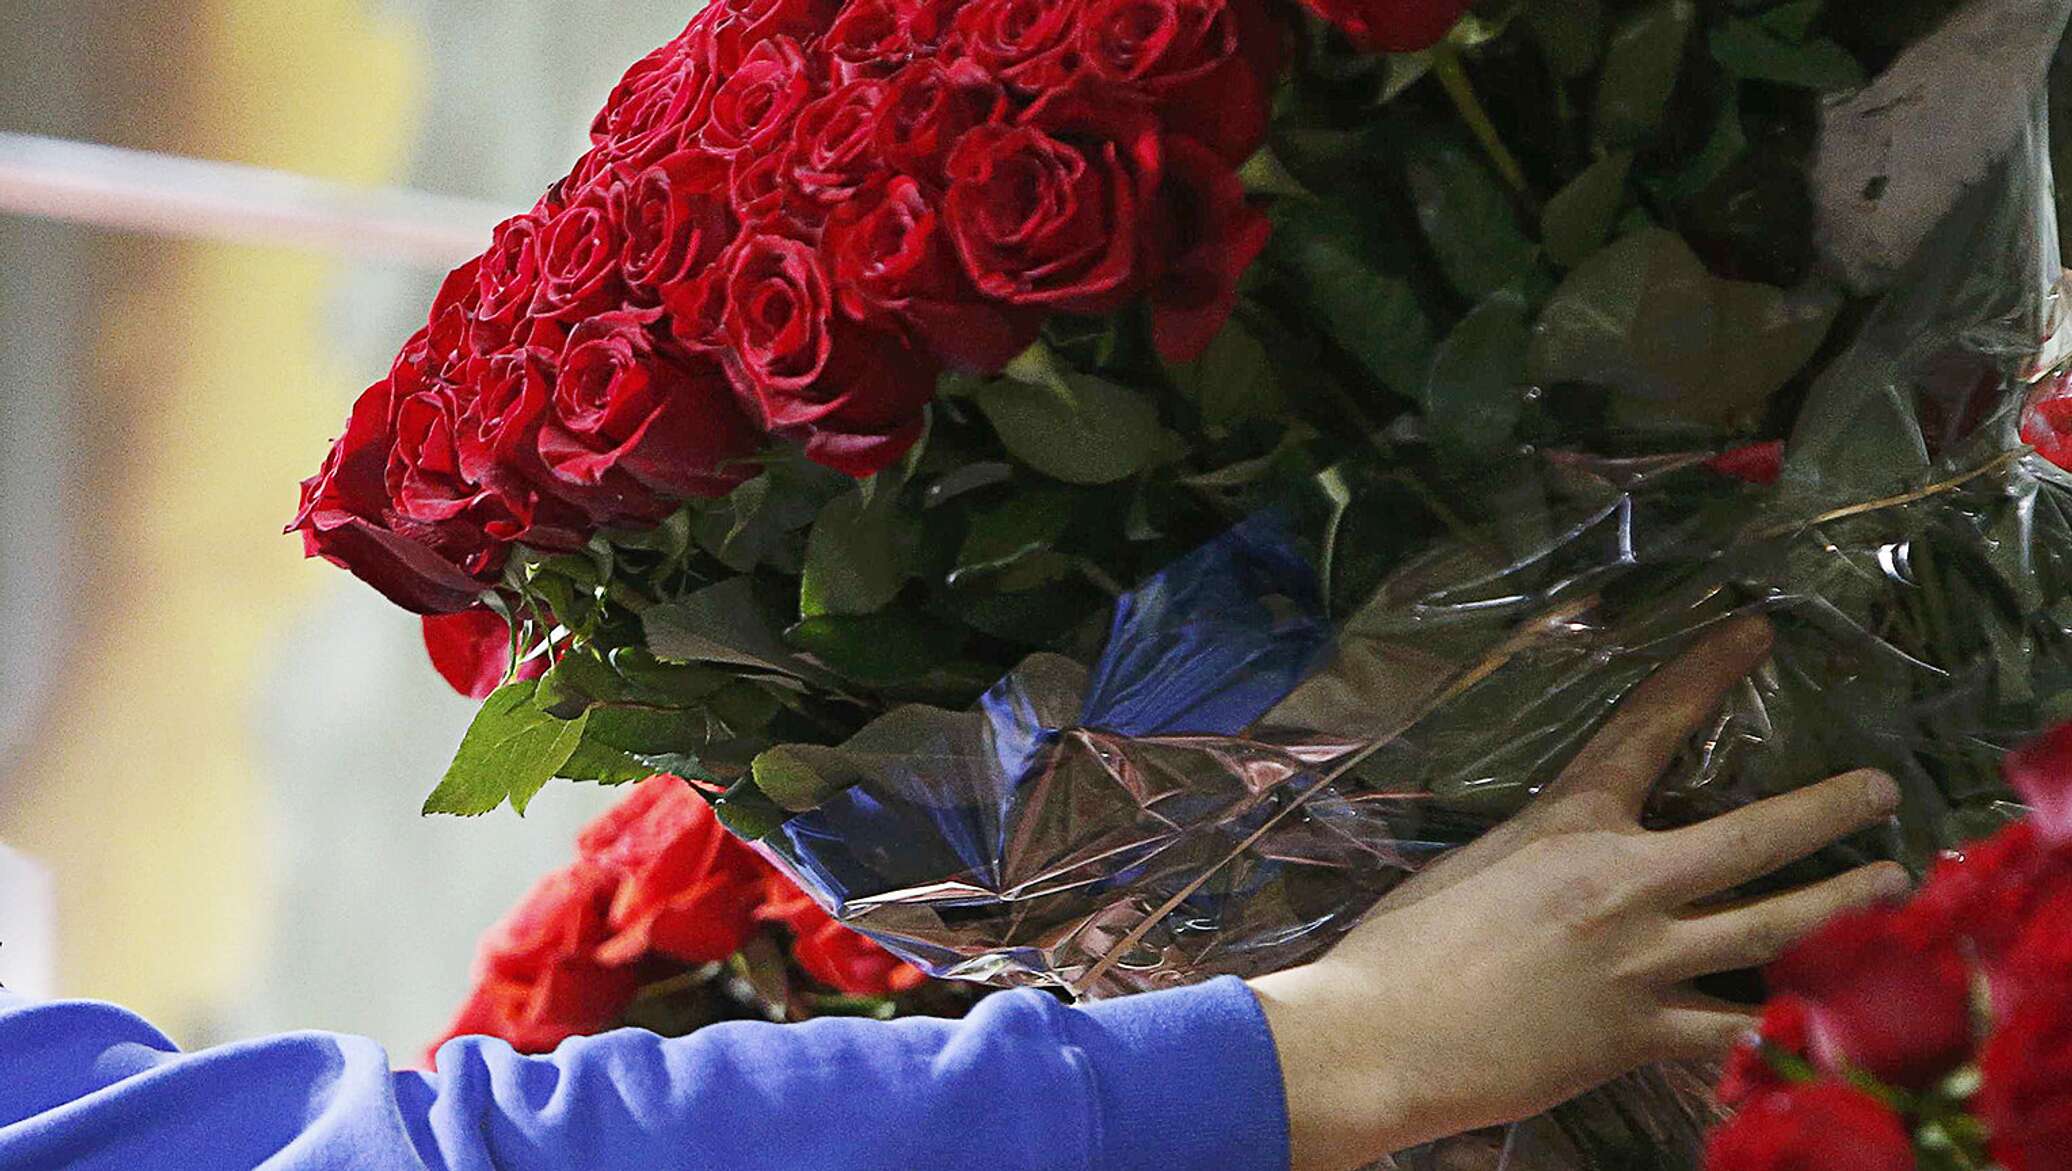 45 дарят цветы. Мужчина с букетом роз. Mujcina c buketom roz. Букет цветов в руках. Букет роз в руках.